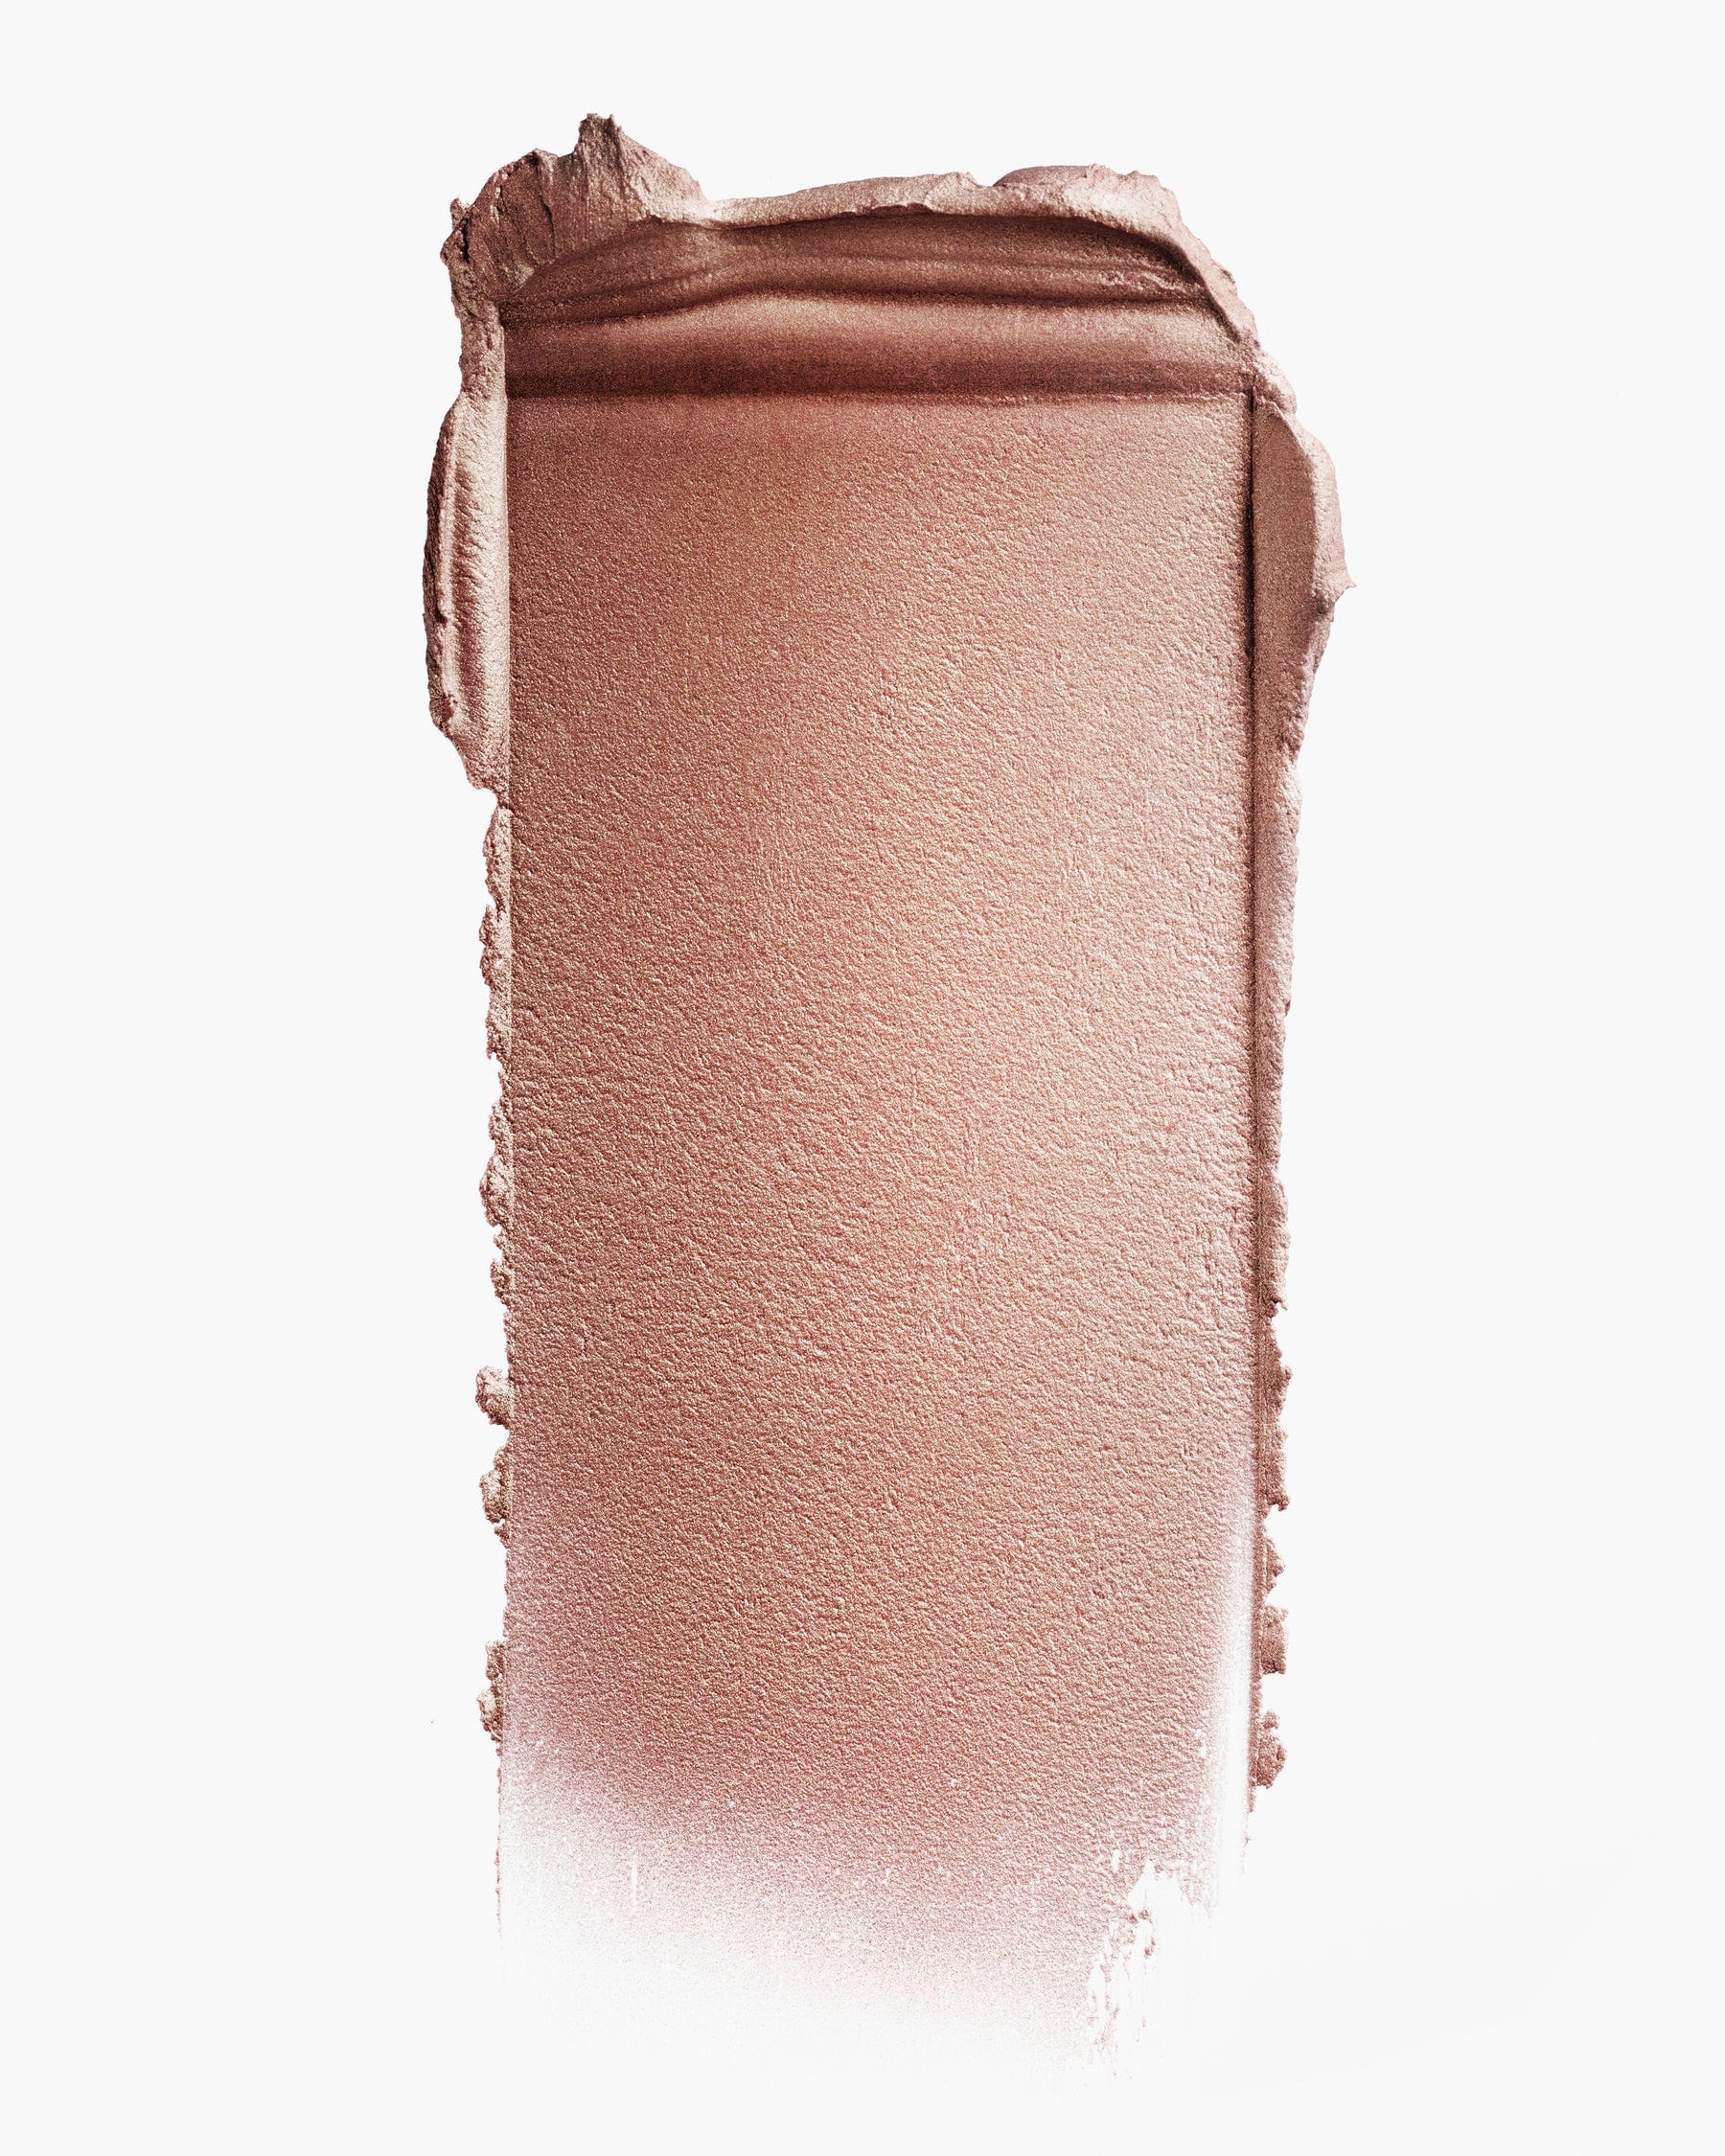 Manasi 7 cream blush Bronzelighter - Roseate sunja link - canada